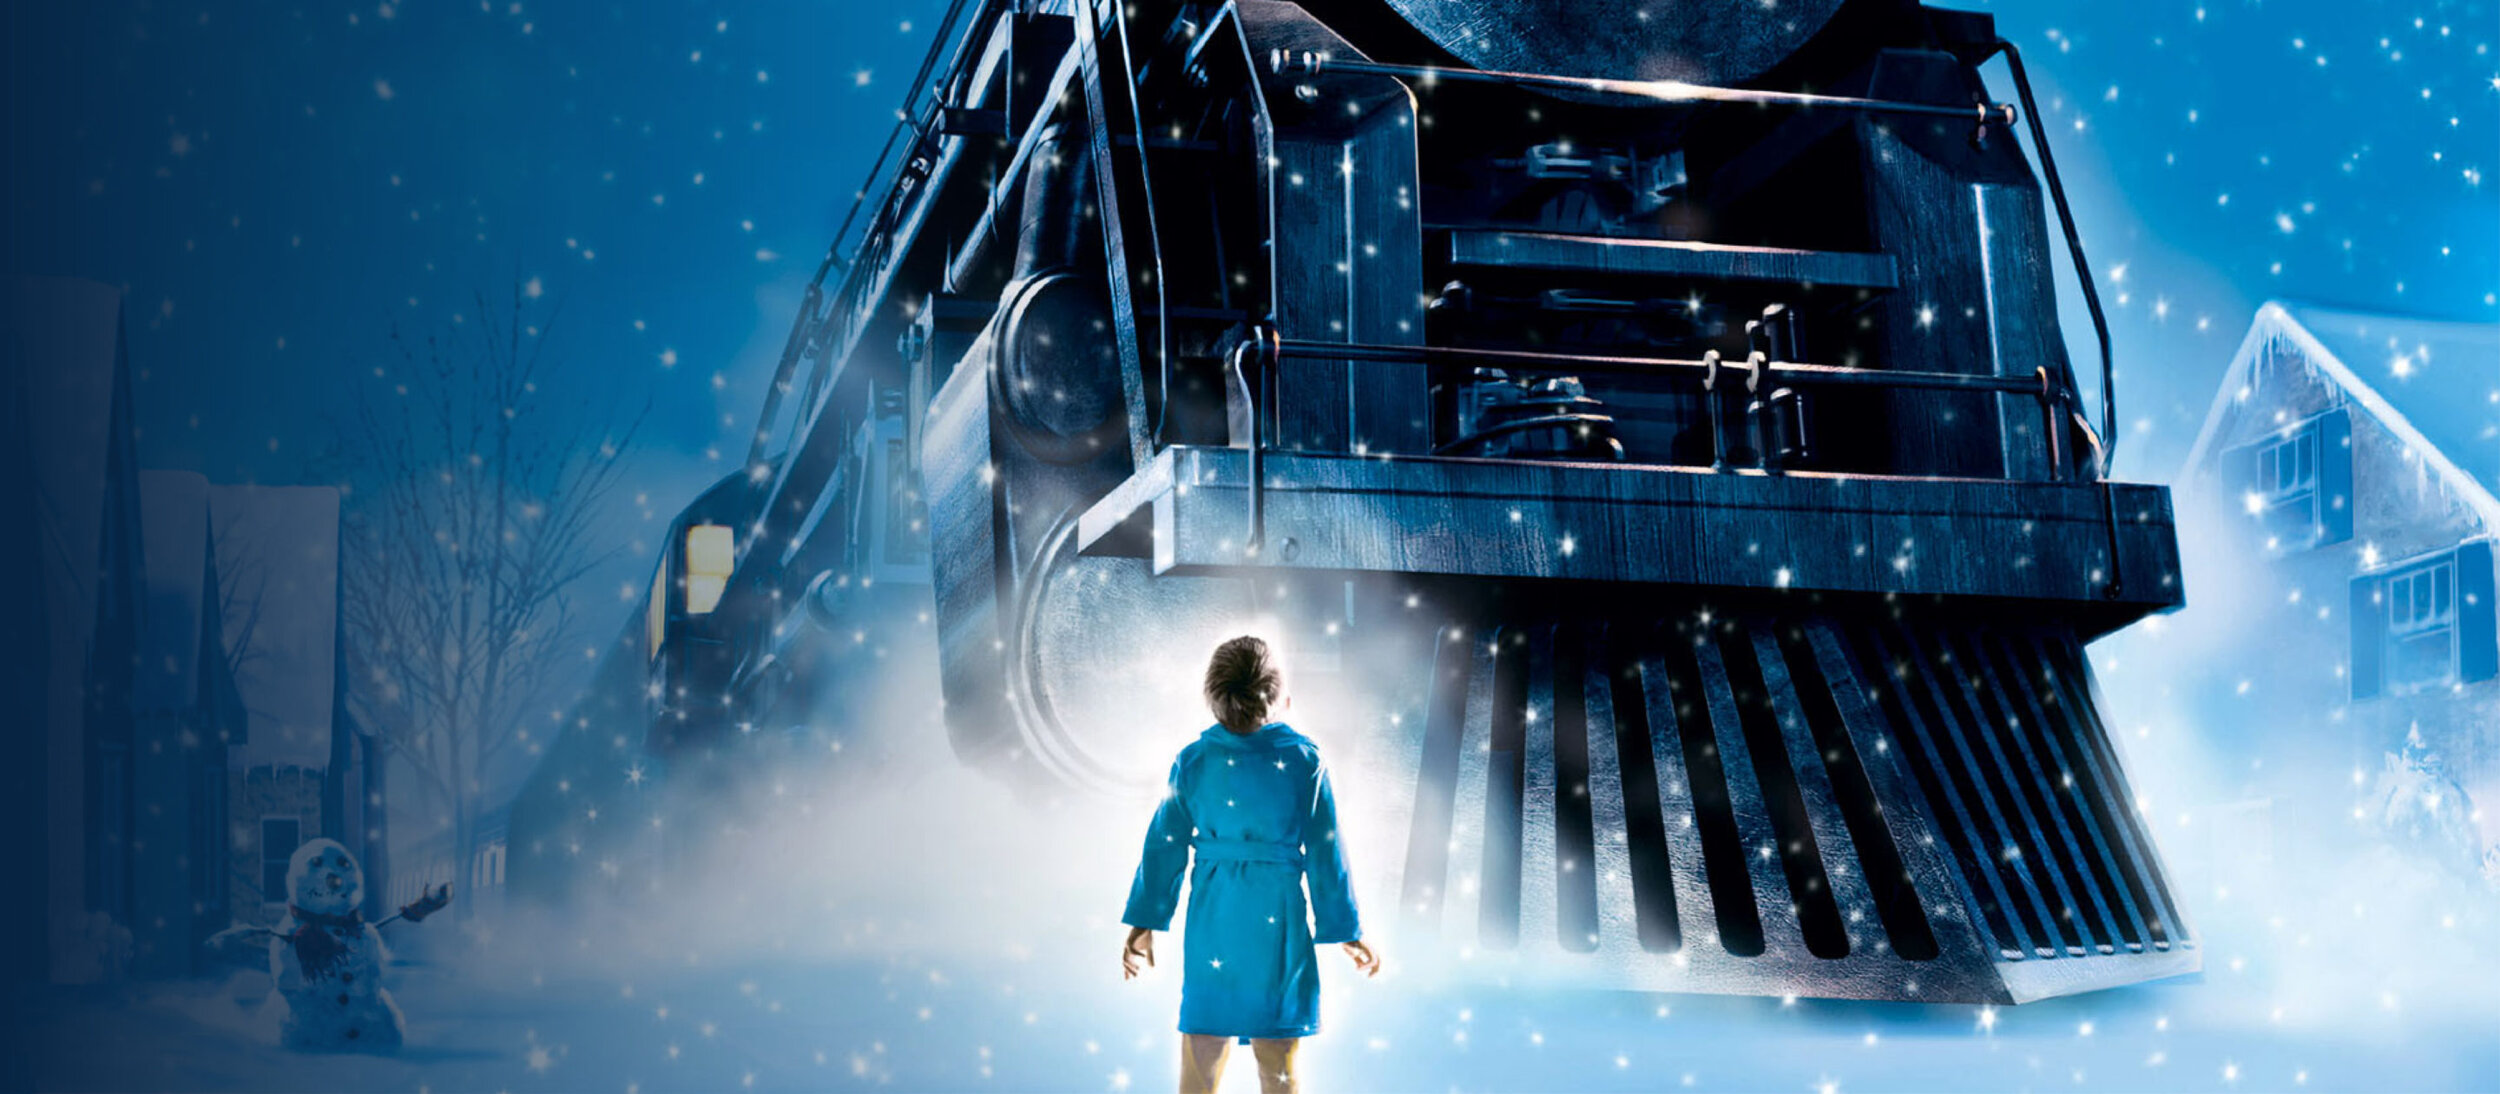 The Polar Express (2004) - IMDb